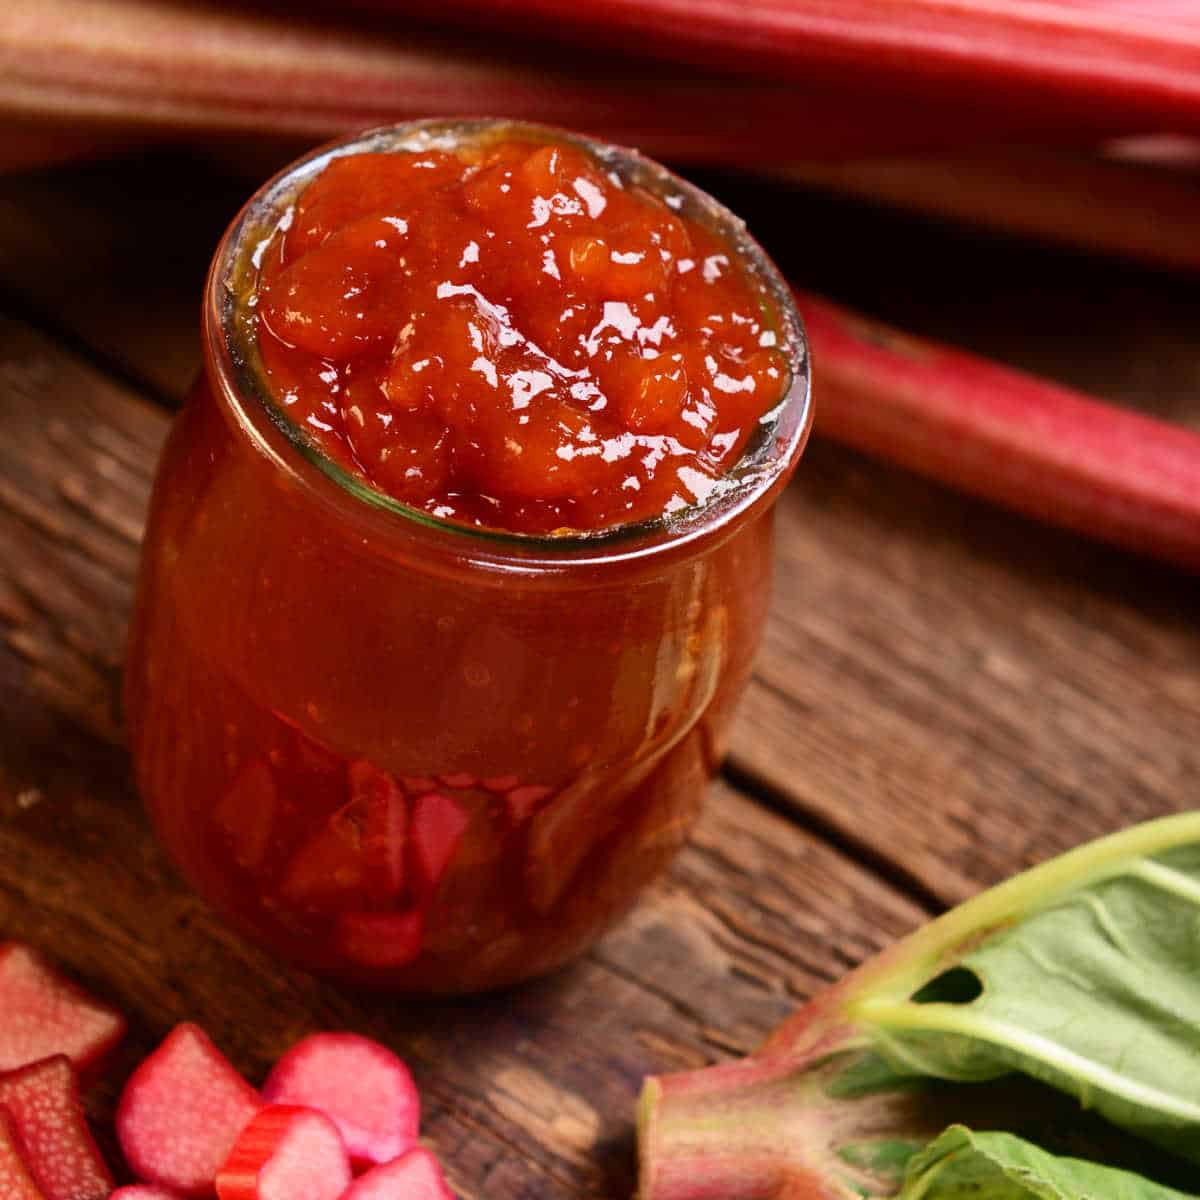 Jar of rhubarb jam sitting on wood table with some cut-up rhubarb